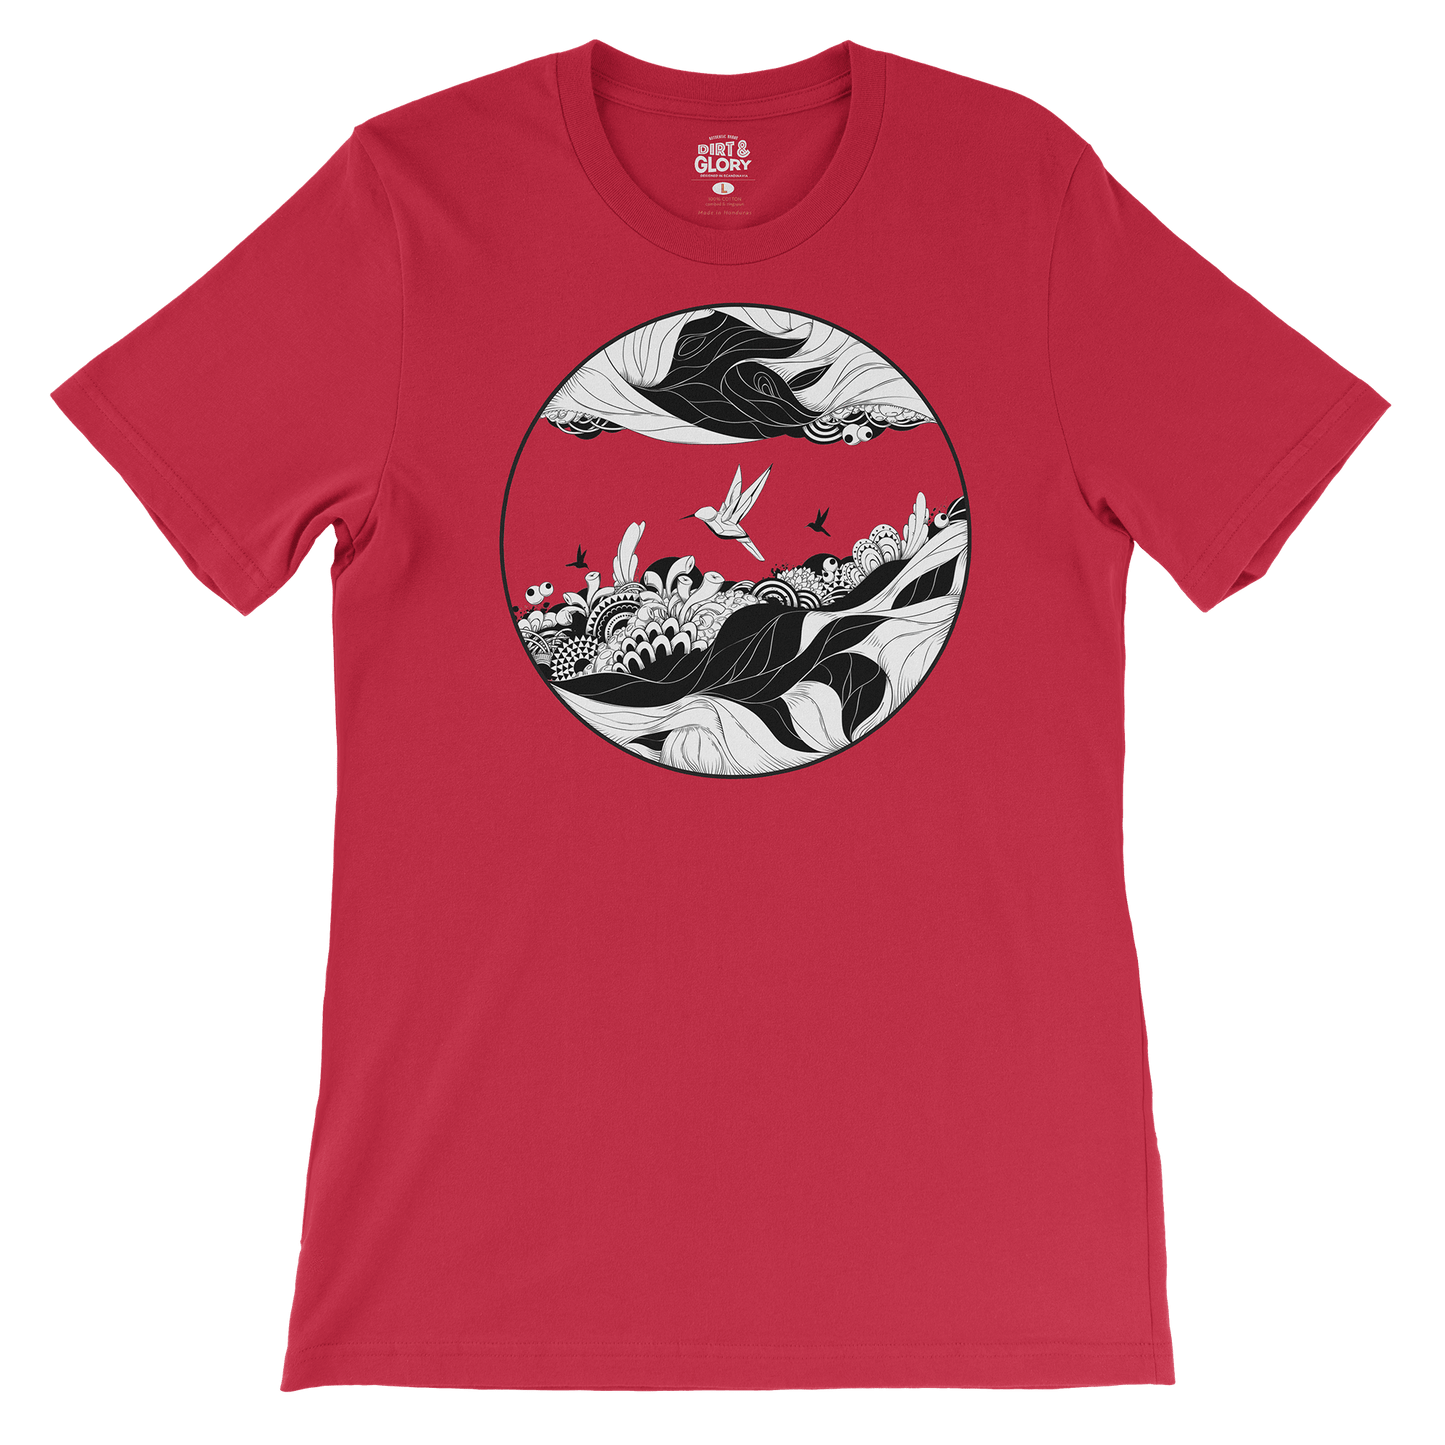 Red Fantasy - Women's Tee T-shirt by DIRT & GLORY